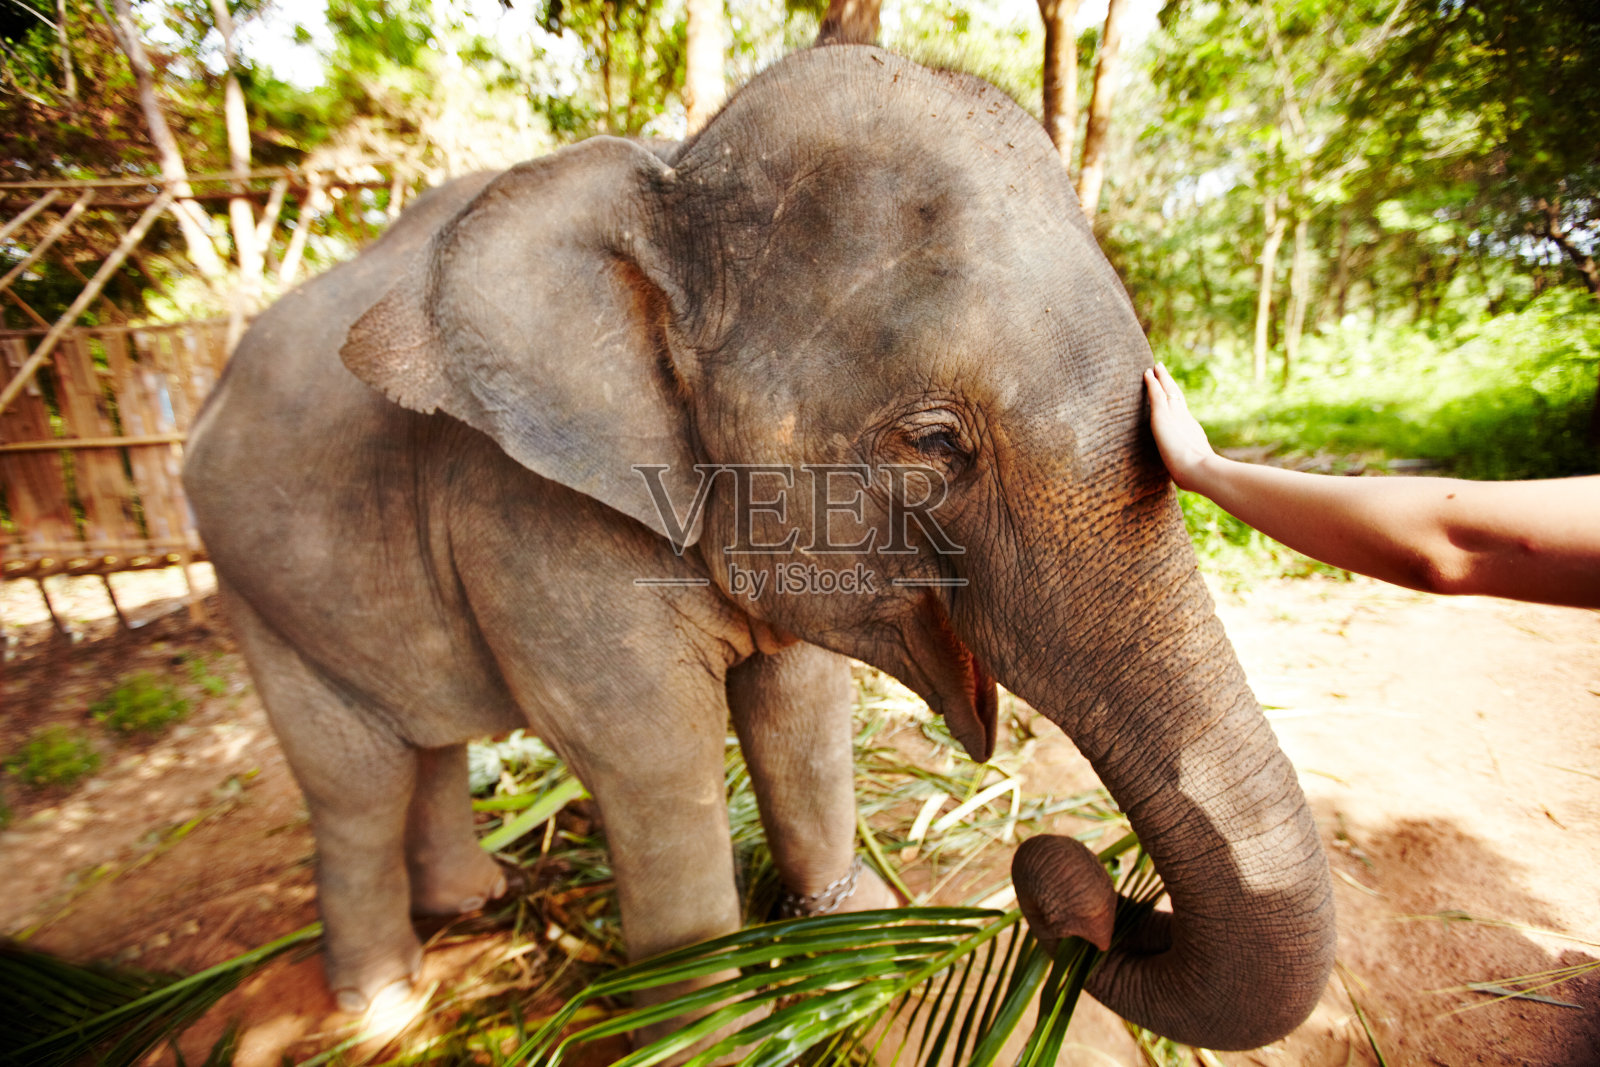 Elephas格言指数照片摄影图片